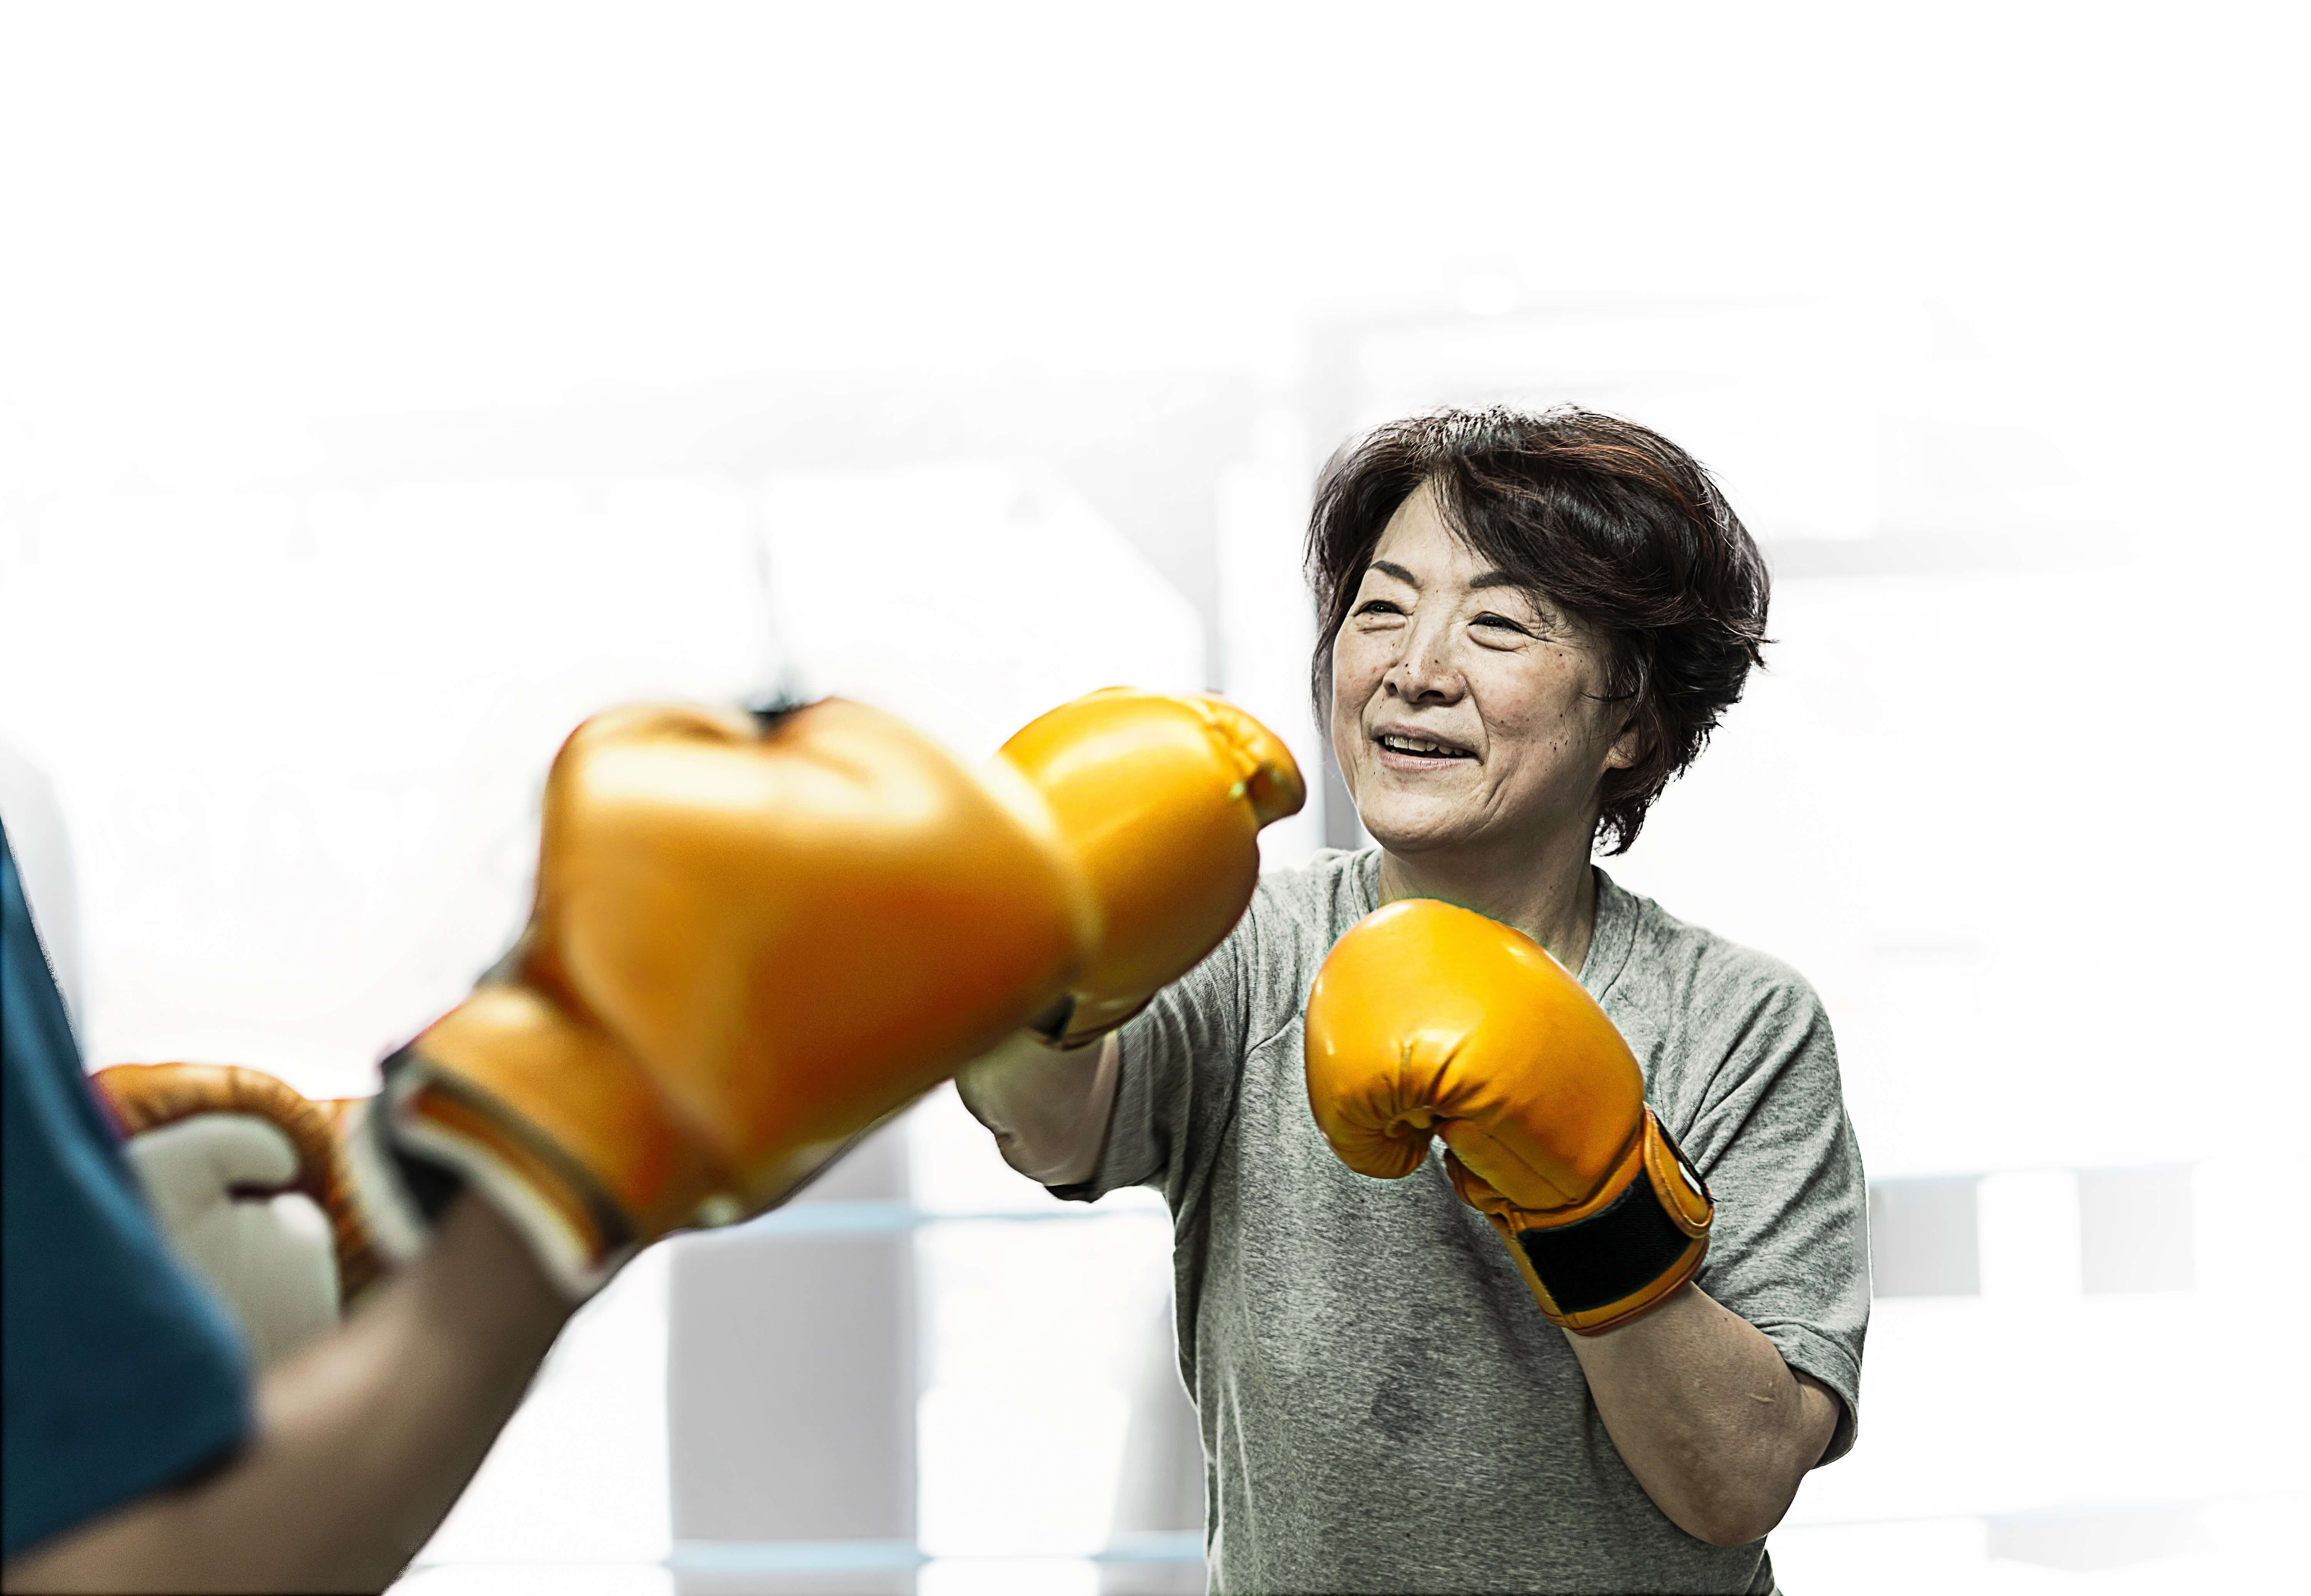 woman boxing